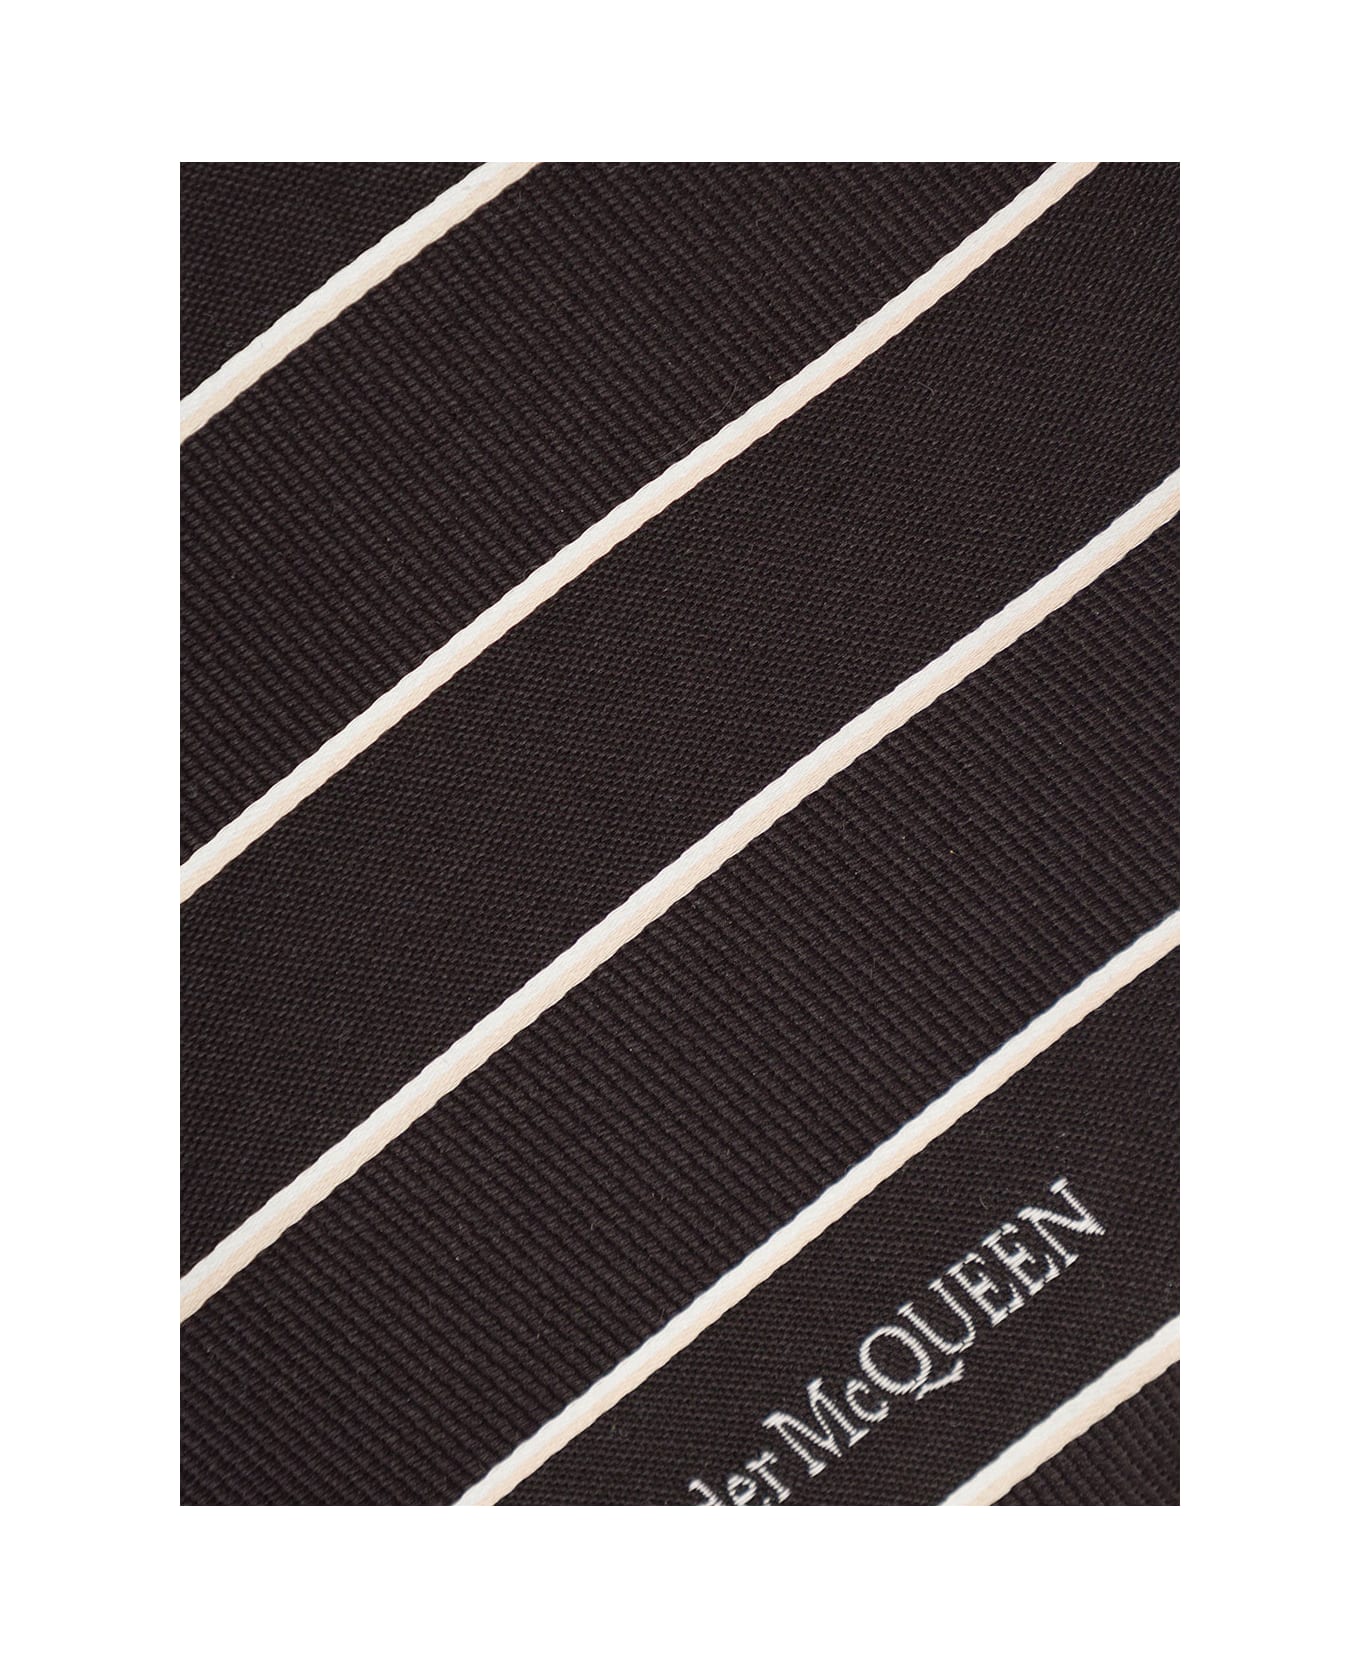 Alexander McQueen Black And White Striped Silk Tie Man - NERO